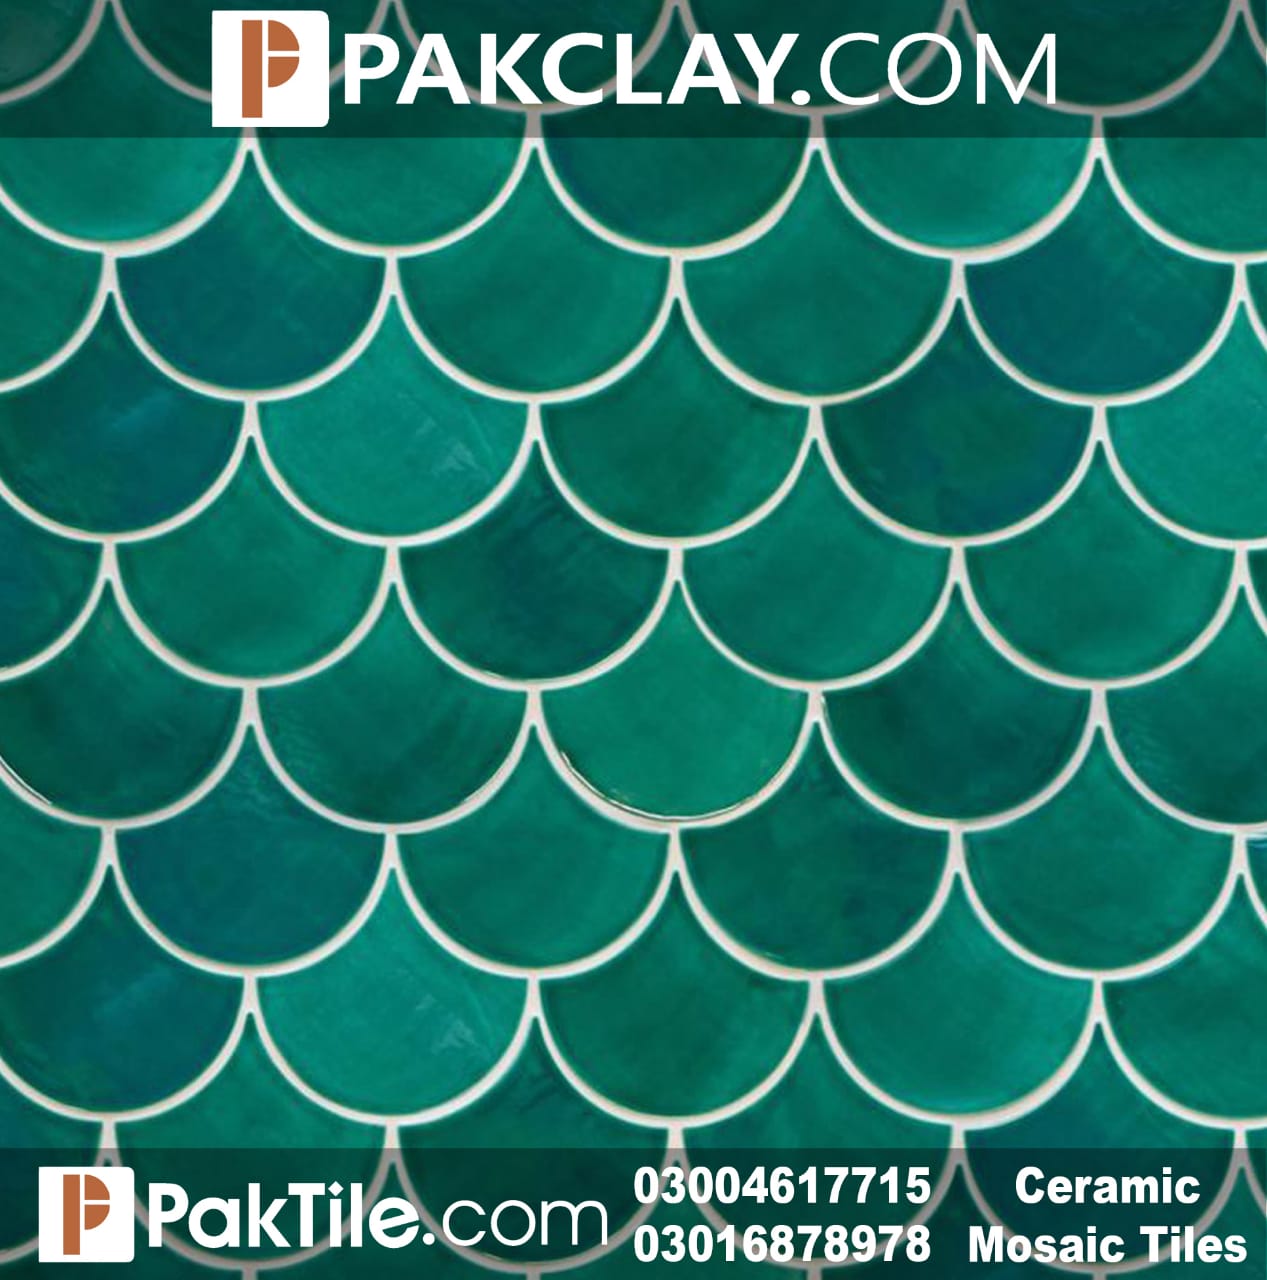 Pak Clay Mosaic Tiles in Lahore